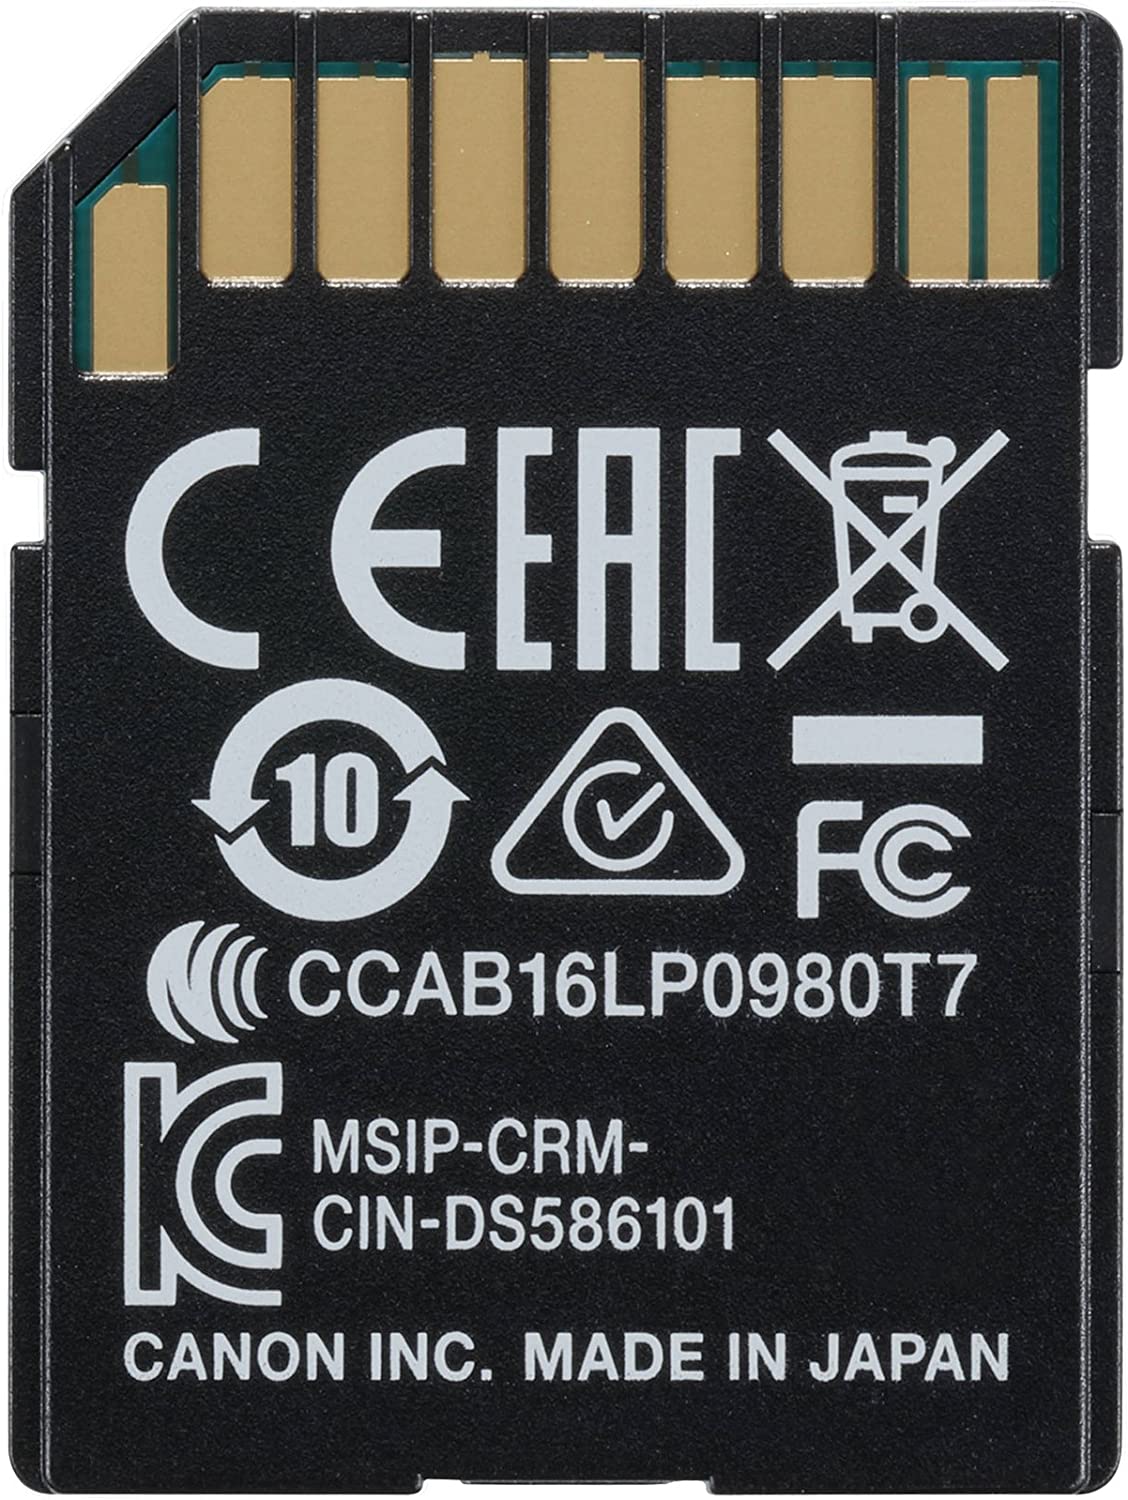 Canon WI-FI Adapter W-E1, Internal Wireless (1716C001) (Wi-Fi 4 (802.11n), WLAN)